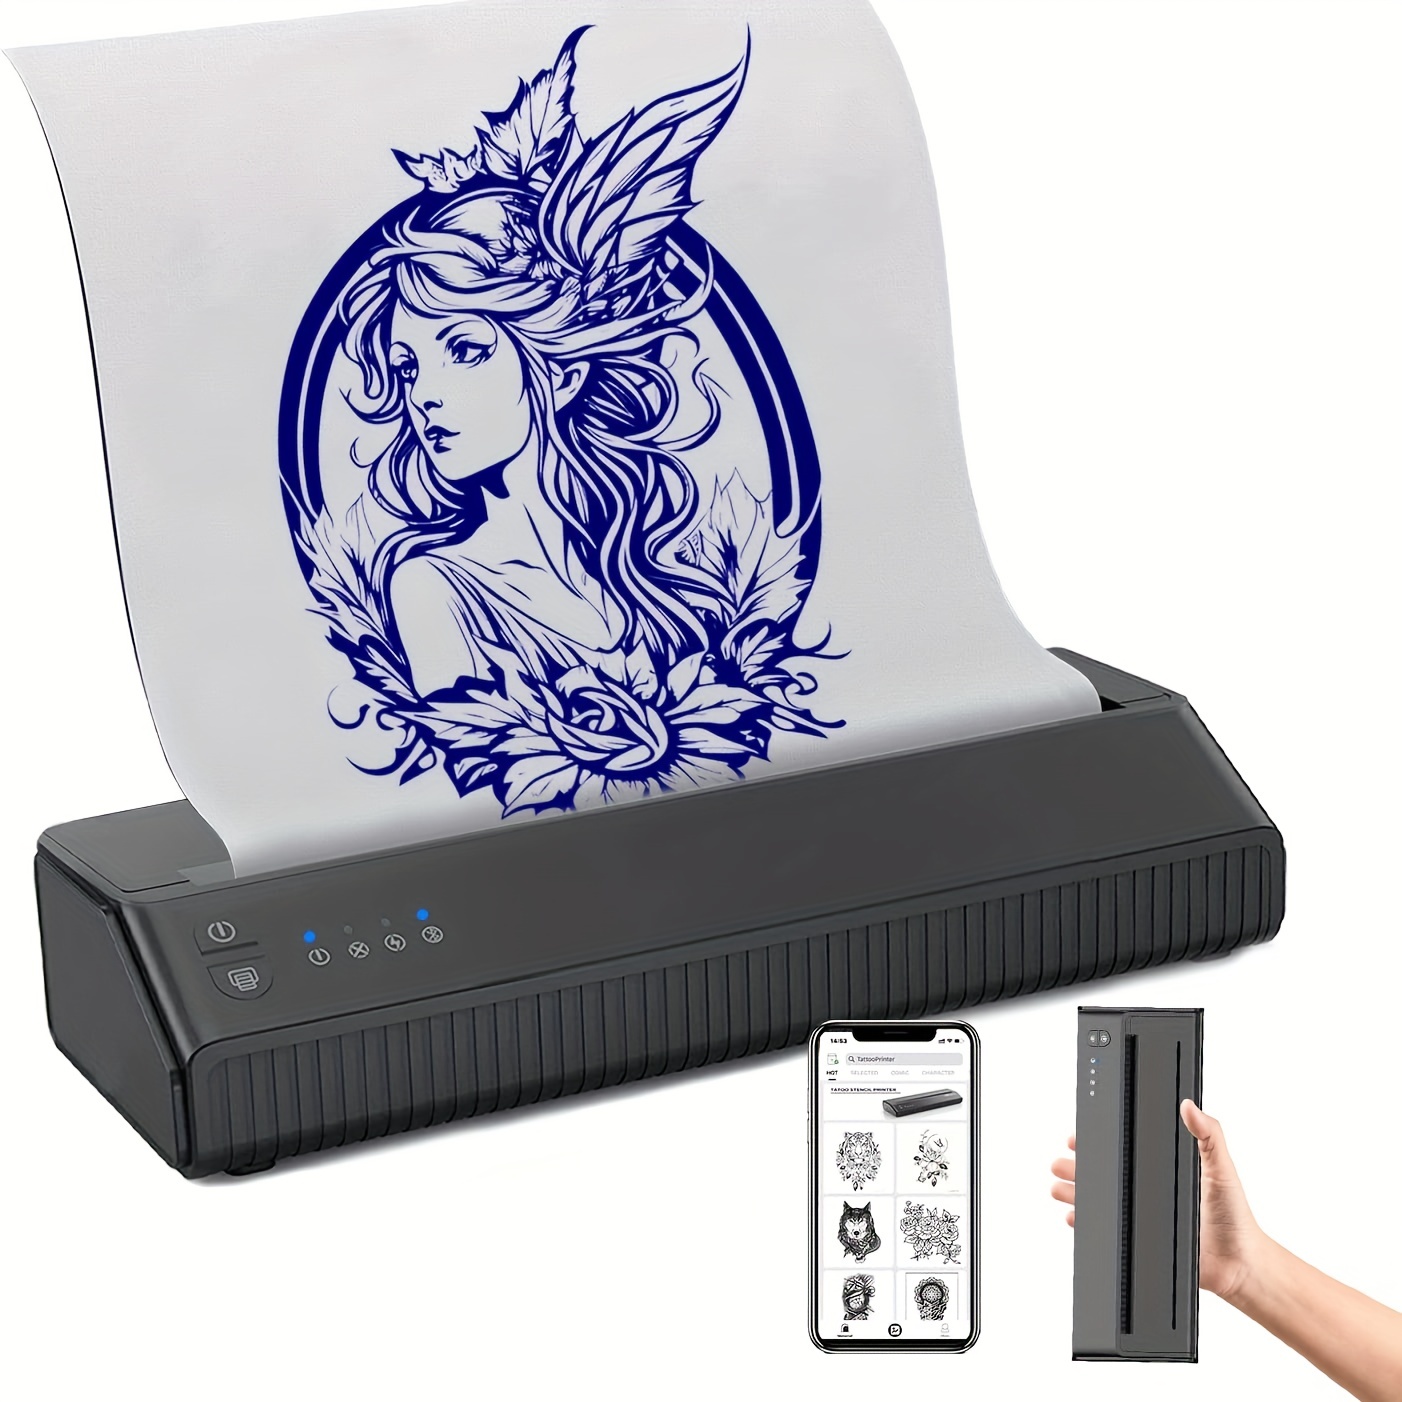 LifeBasis Tattoo Stencil Maker Transfer Machine Thermal Copier With Free  Stencil Paper